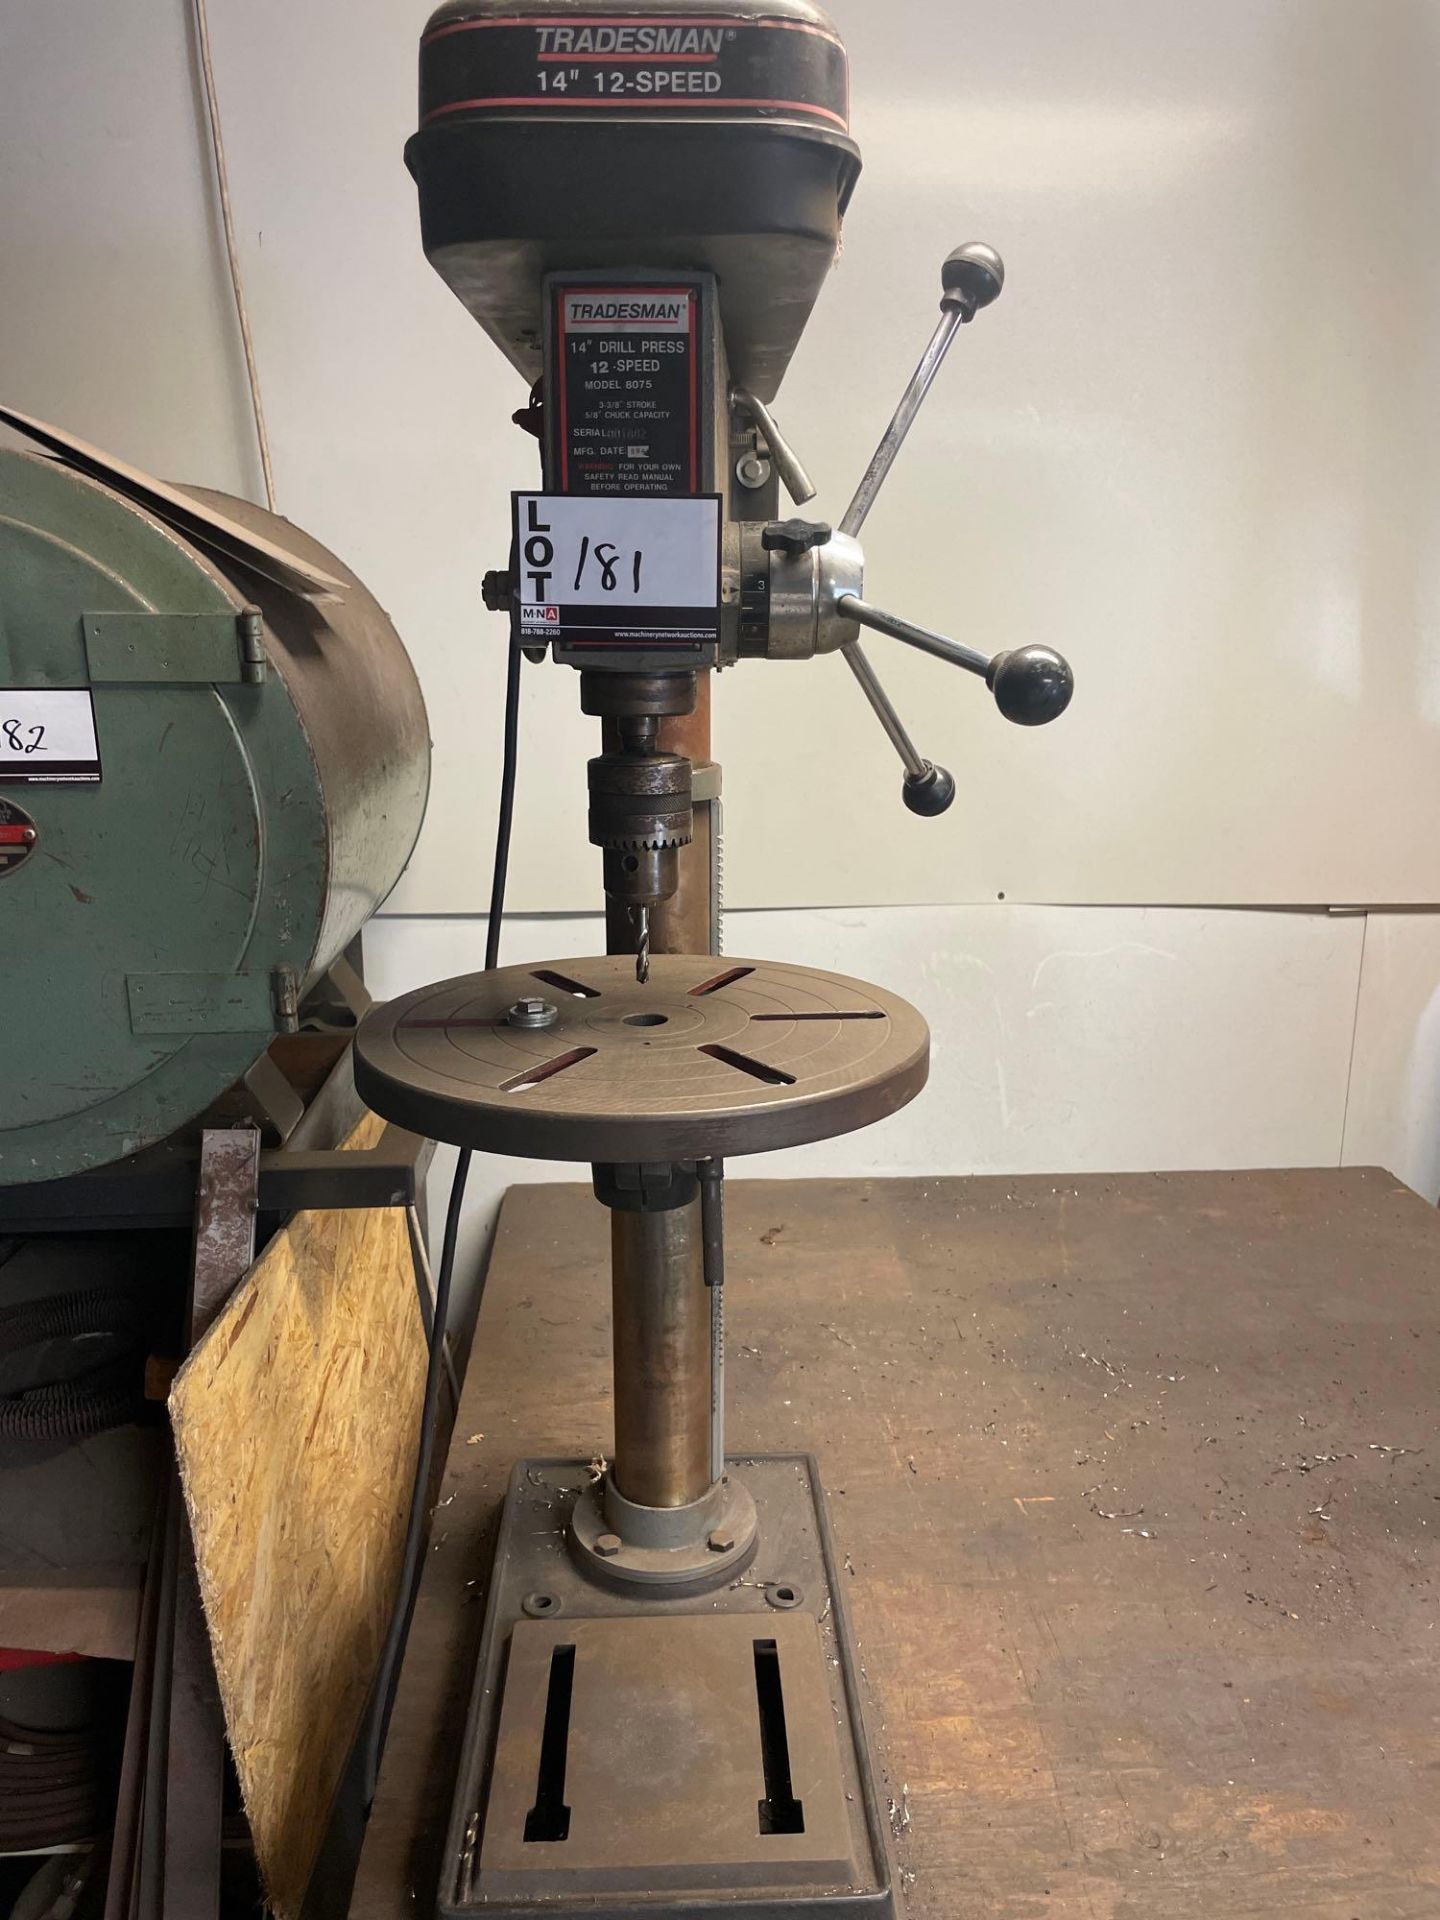 Tradesman 14”12 Speed Drill Press - Image 4 of 5